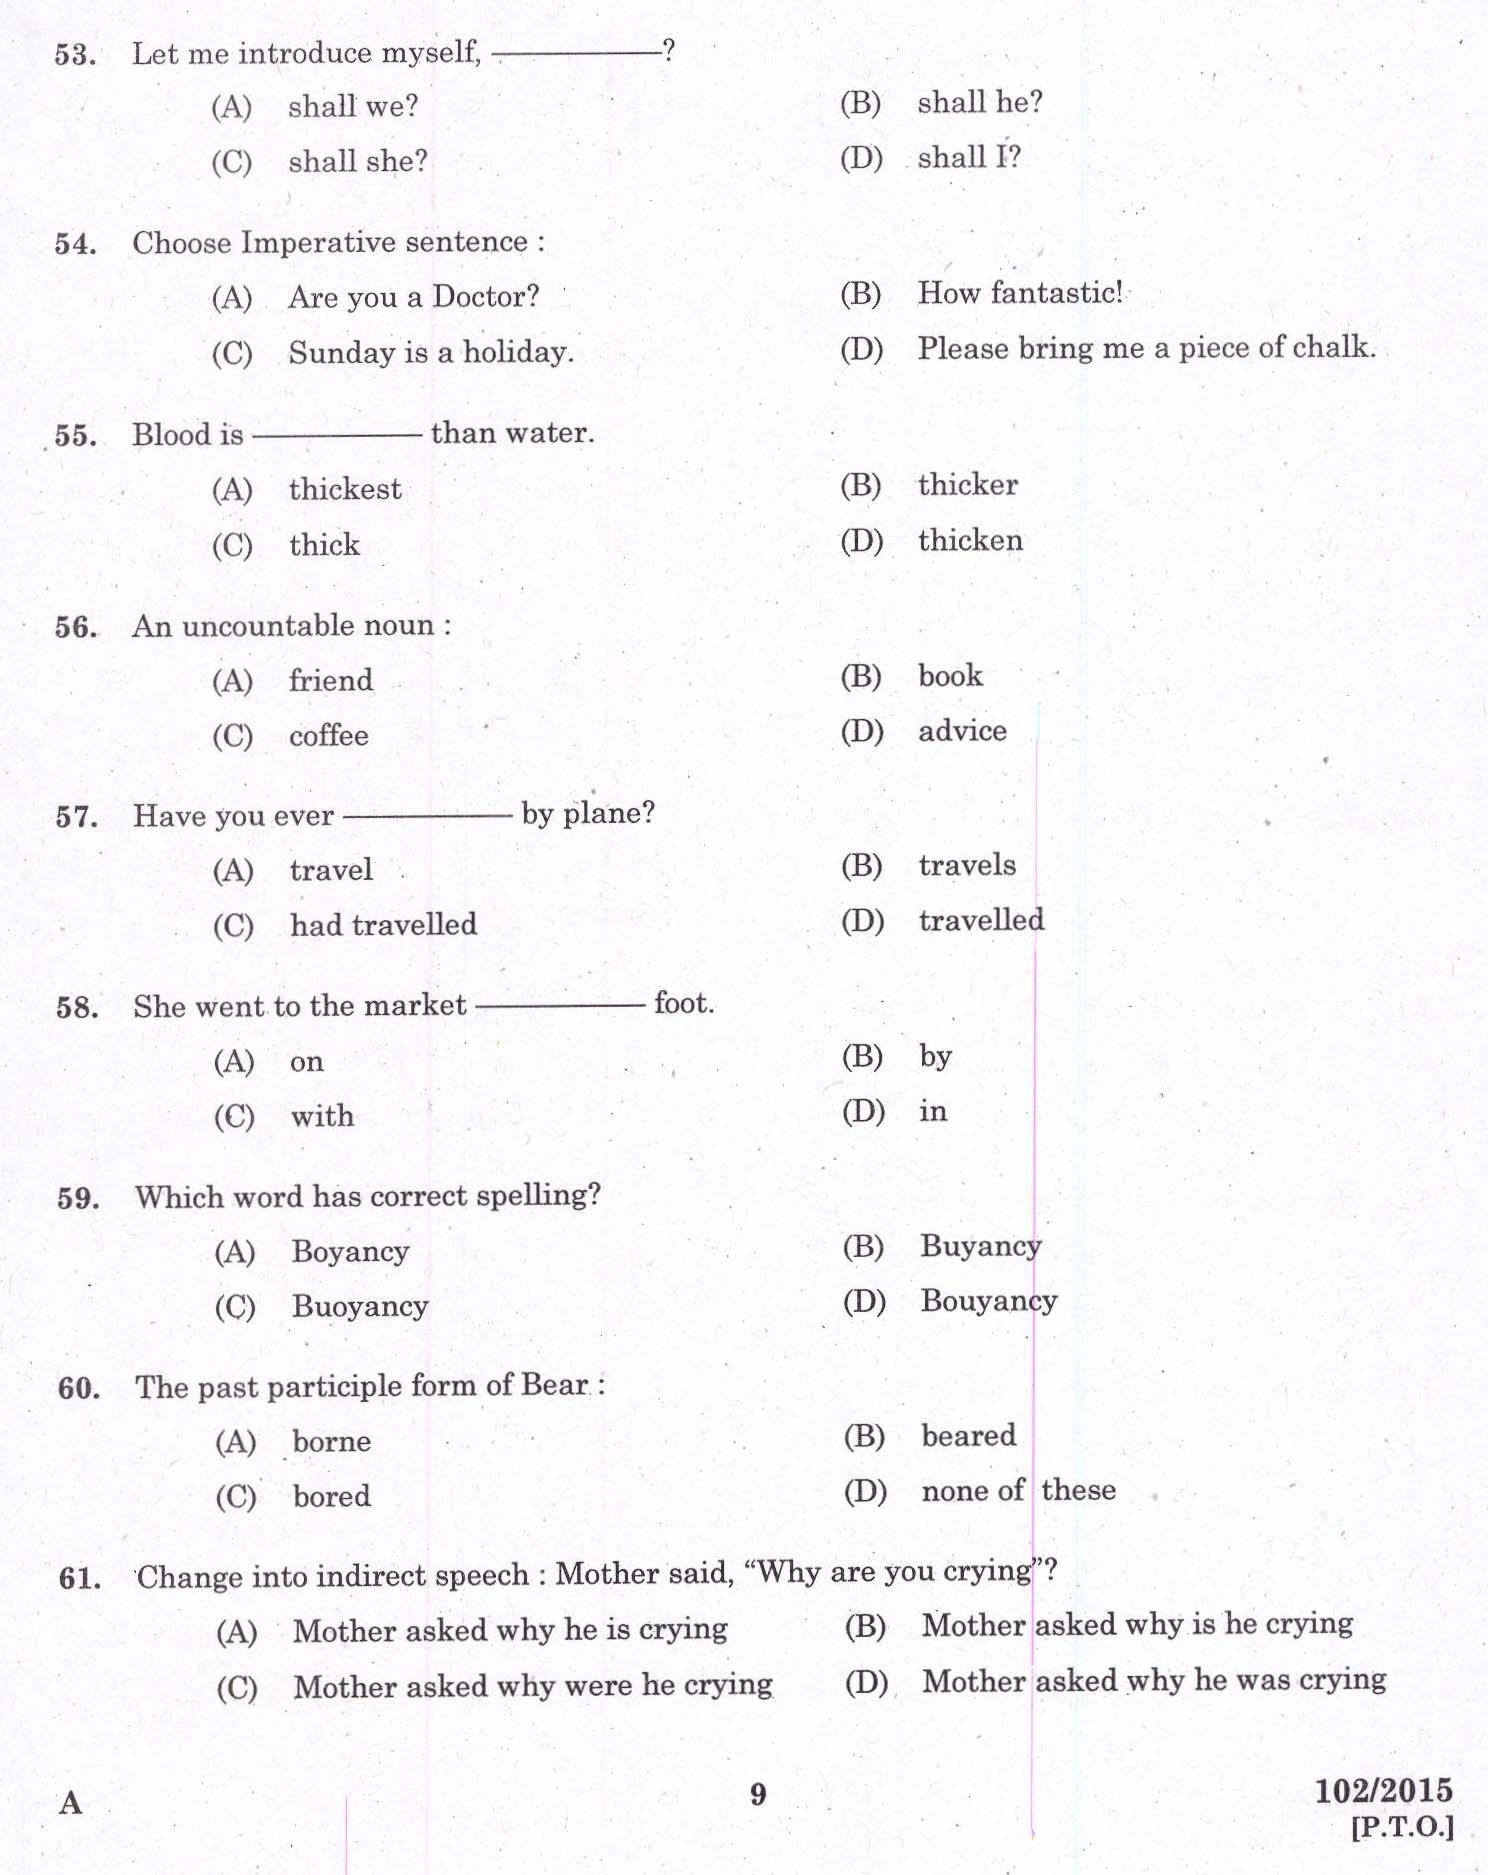 Kerala PSC Telephone Operator Exam Question Code 1022015 7